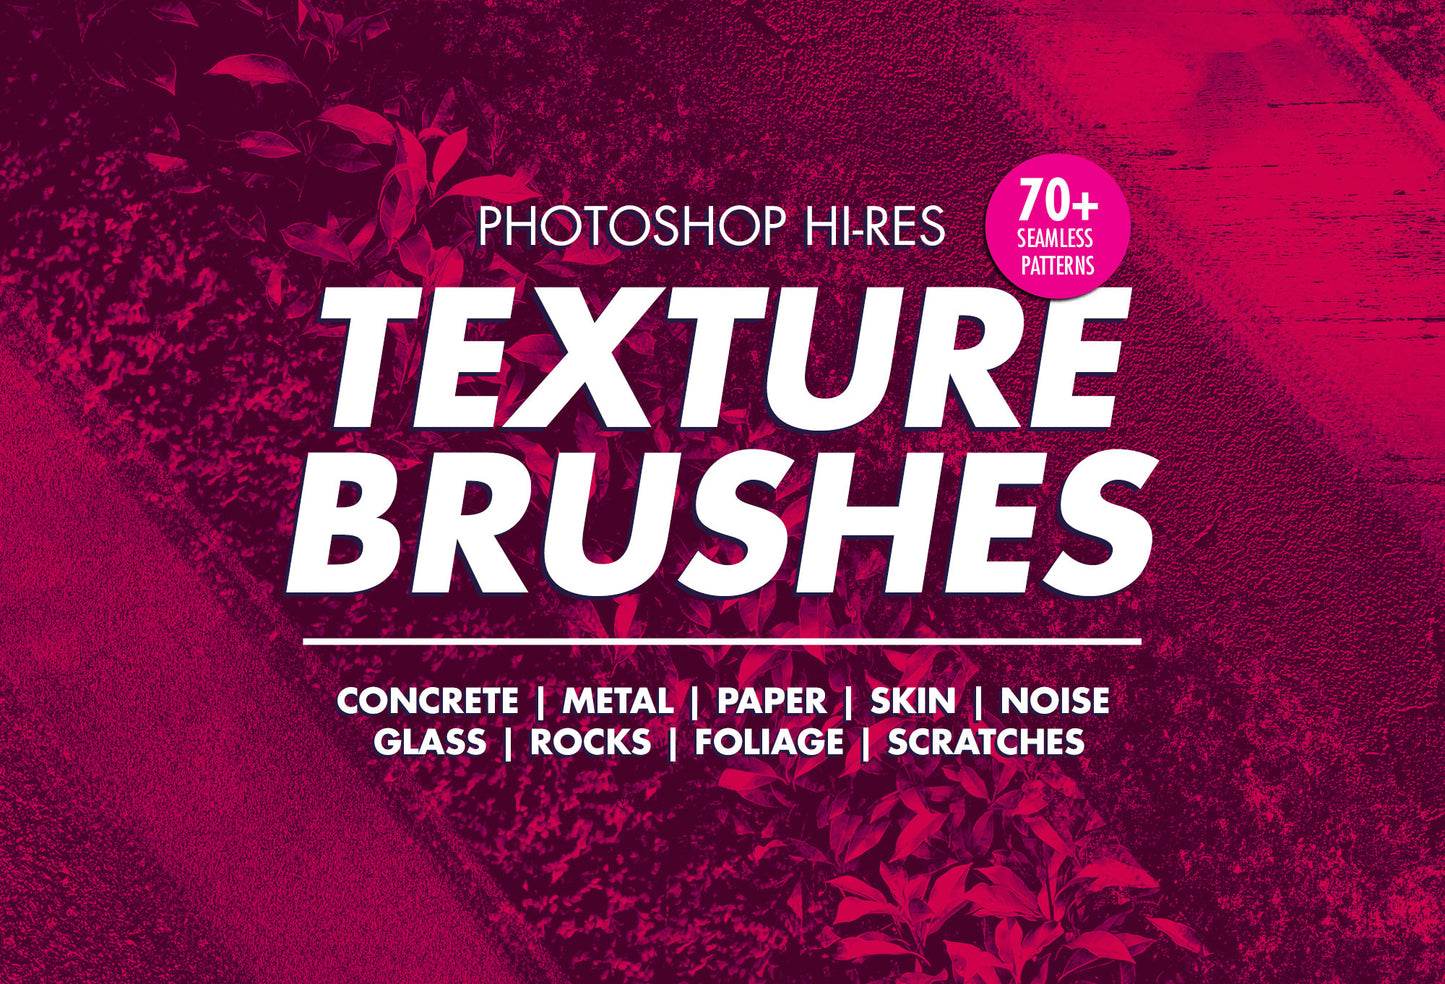 Matt's Photoshop Texture Brush Set